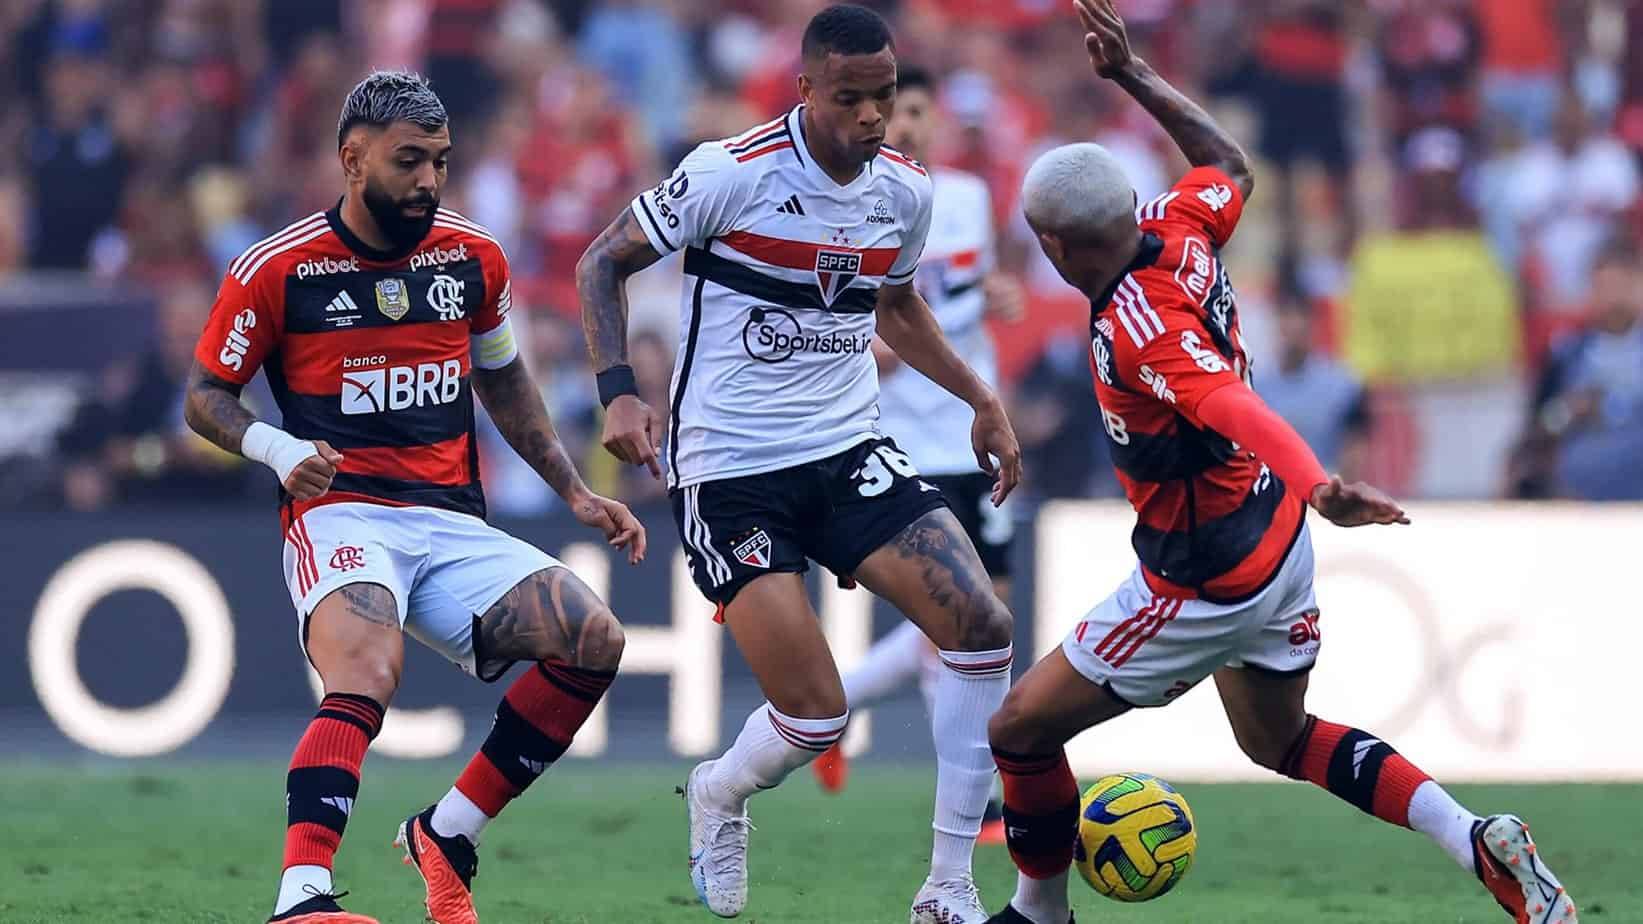 São Paulo vs. Flamengo Preview and Free Pick